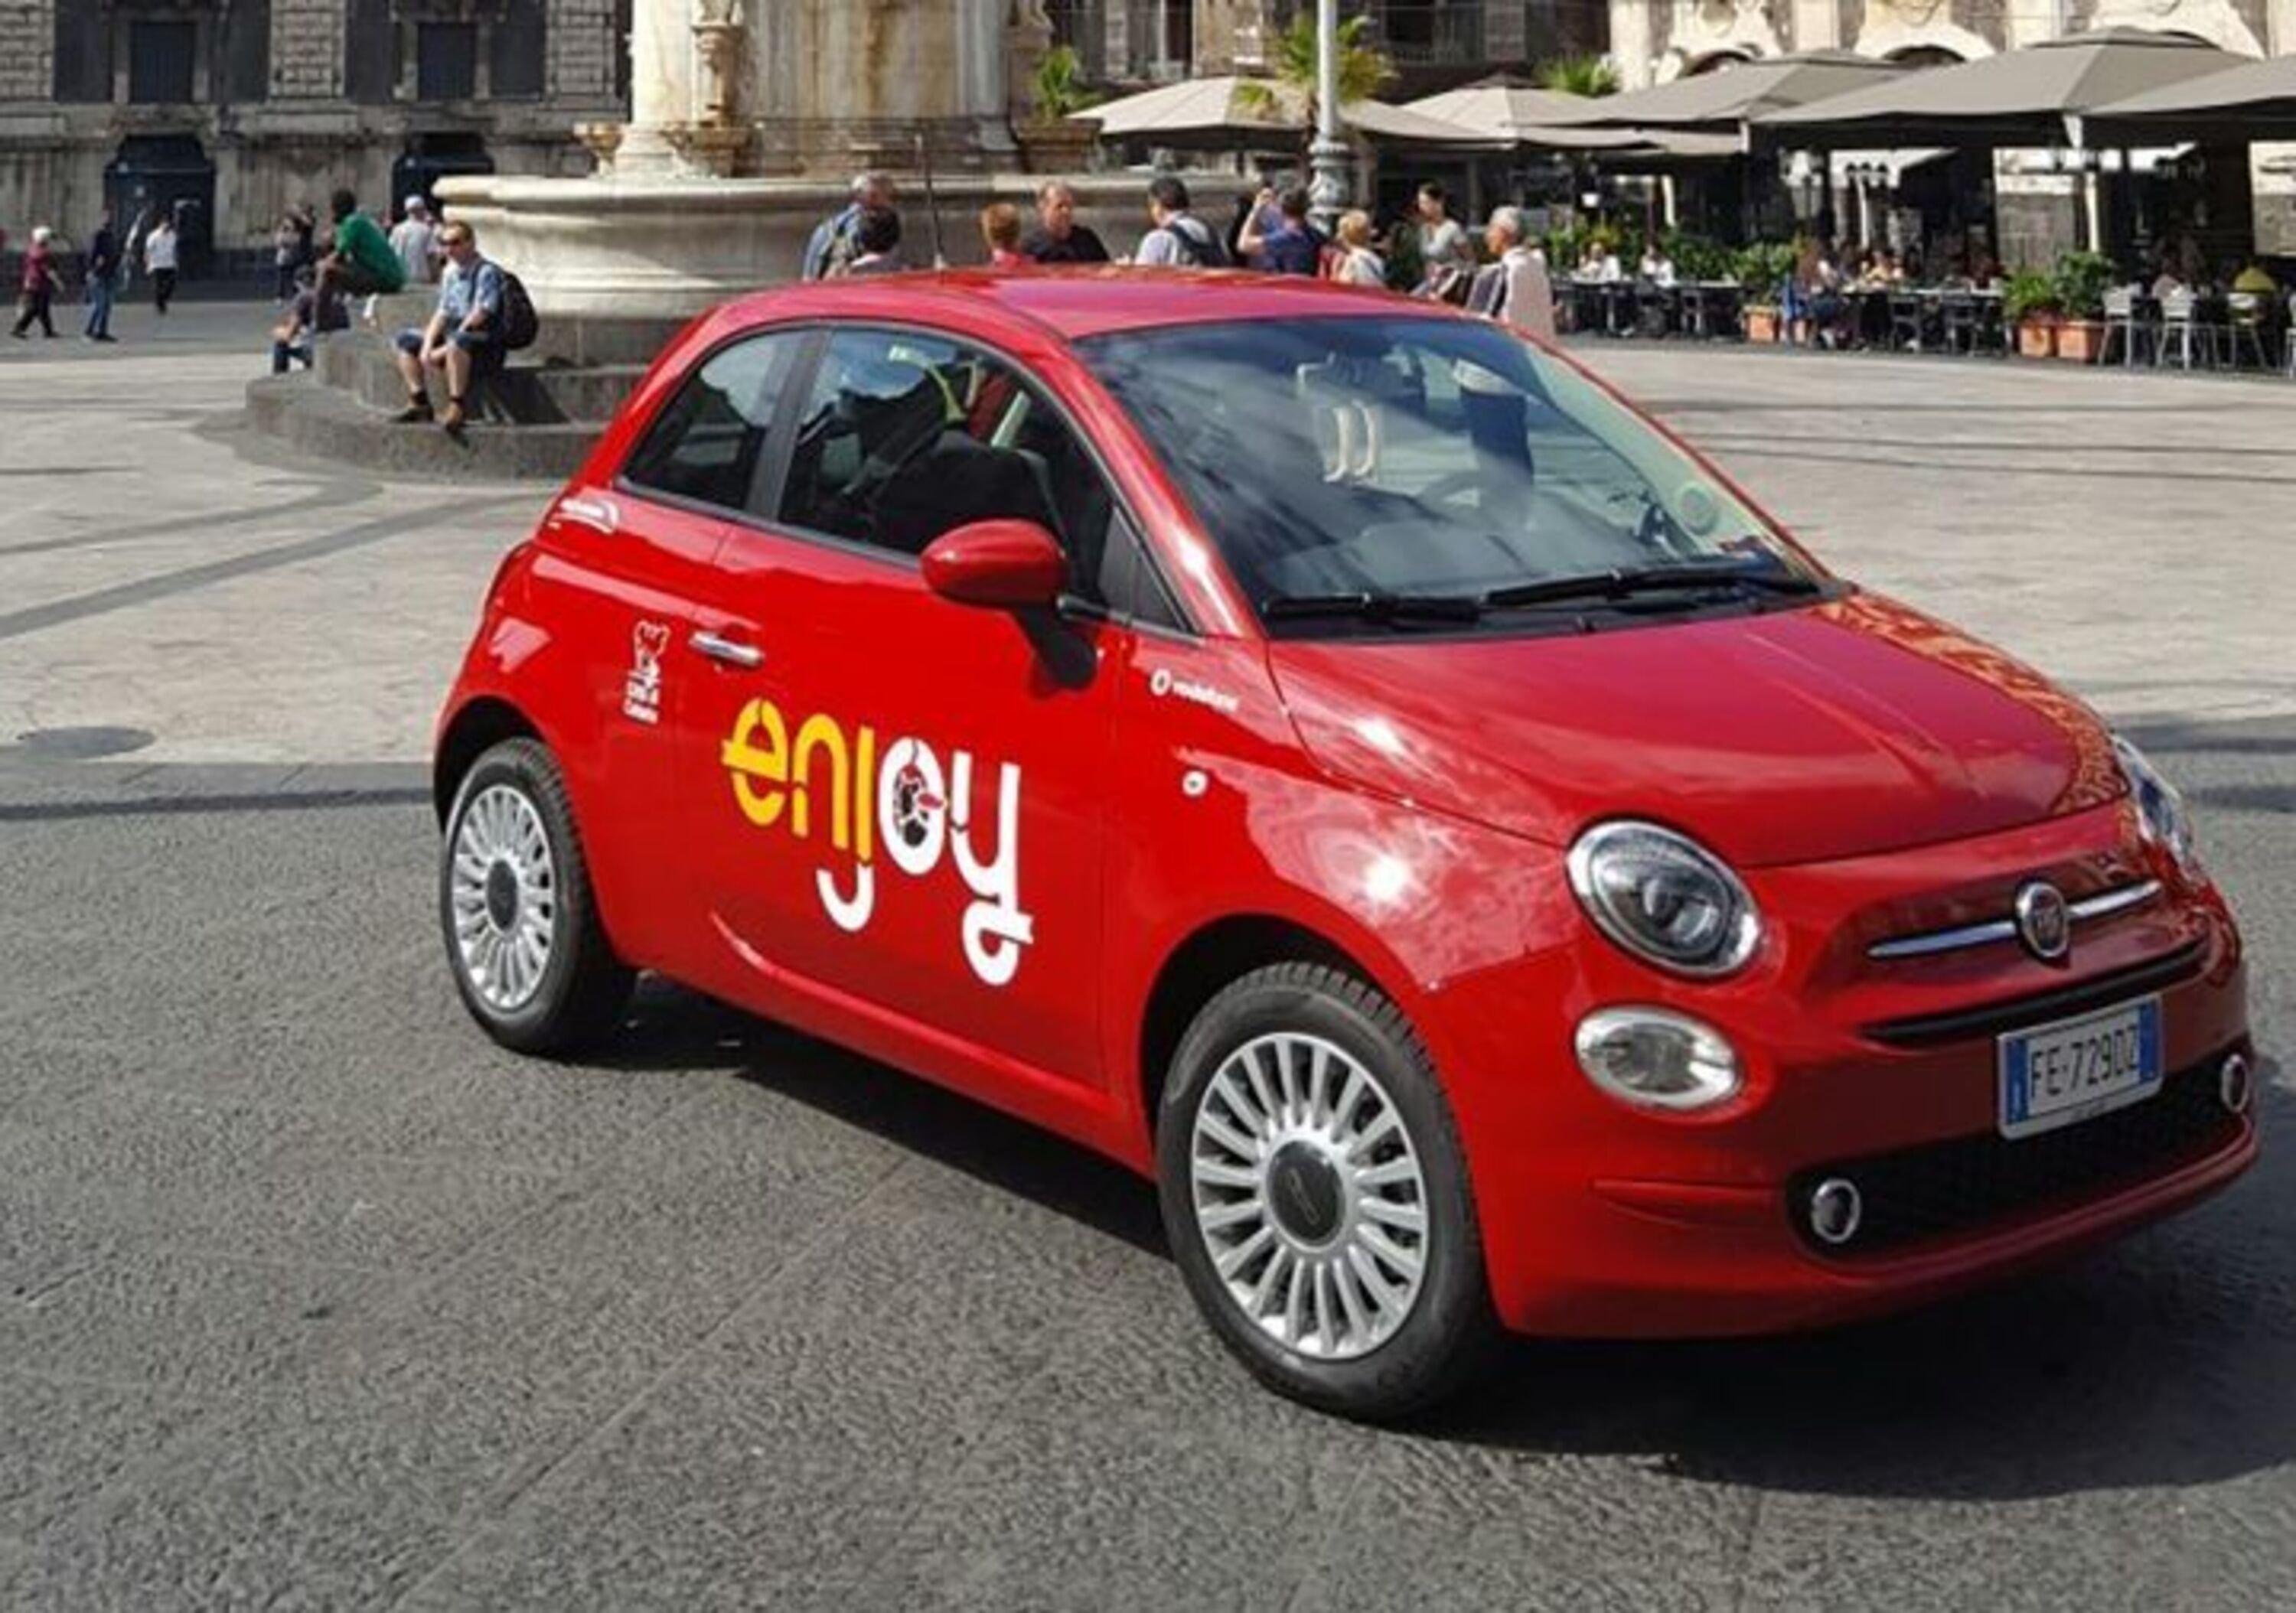 Car sharing: Enjoy arriva a Catania